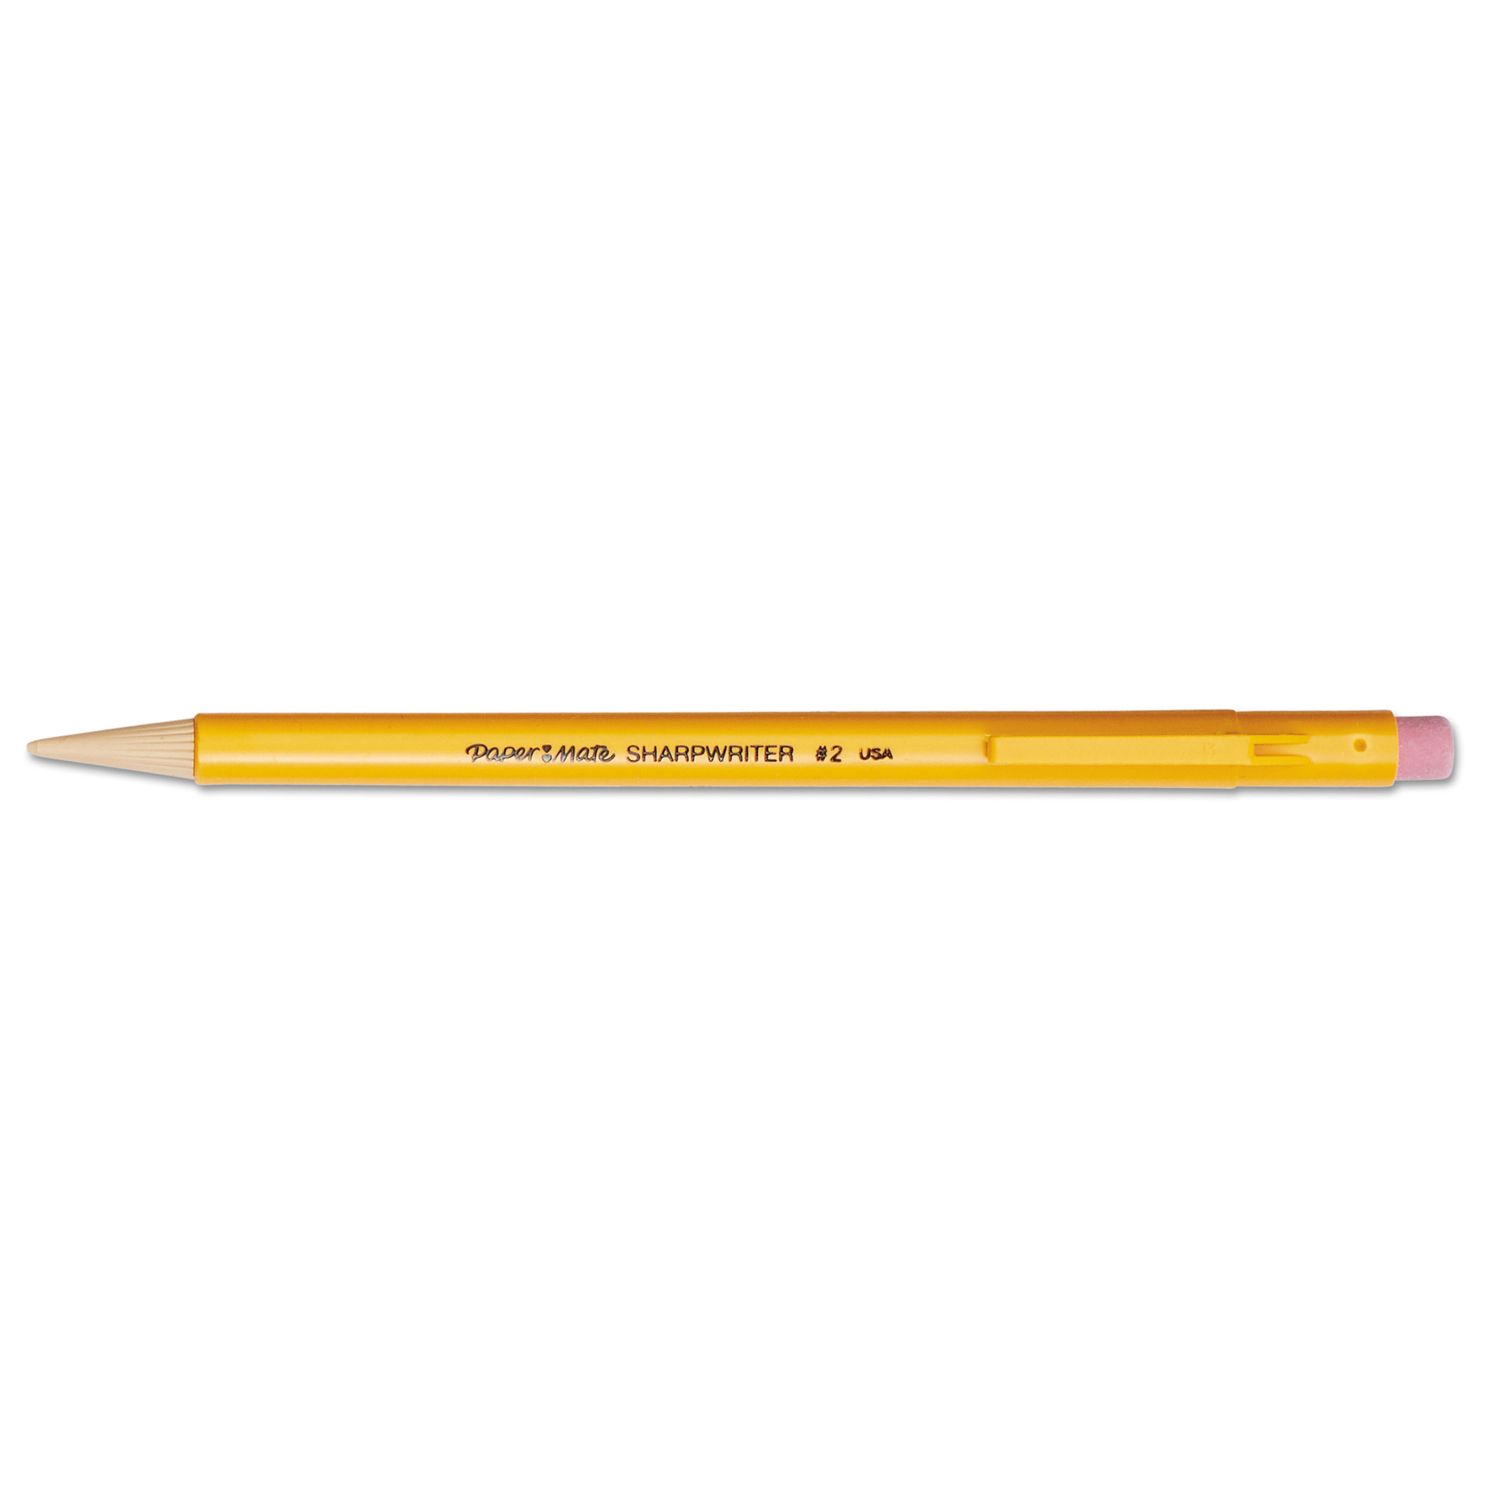 Papermate pencil